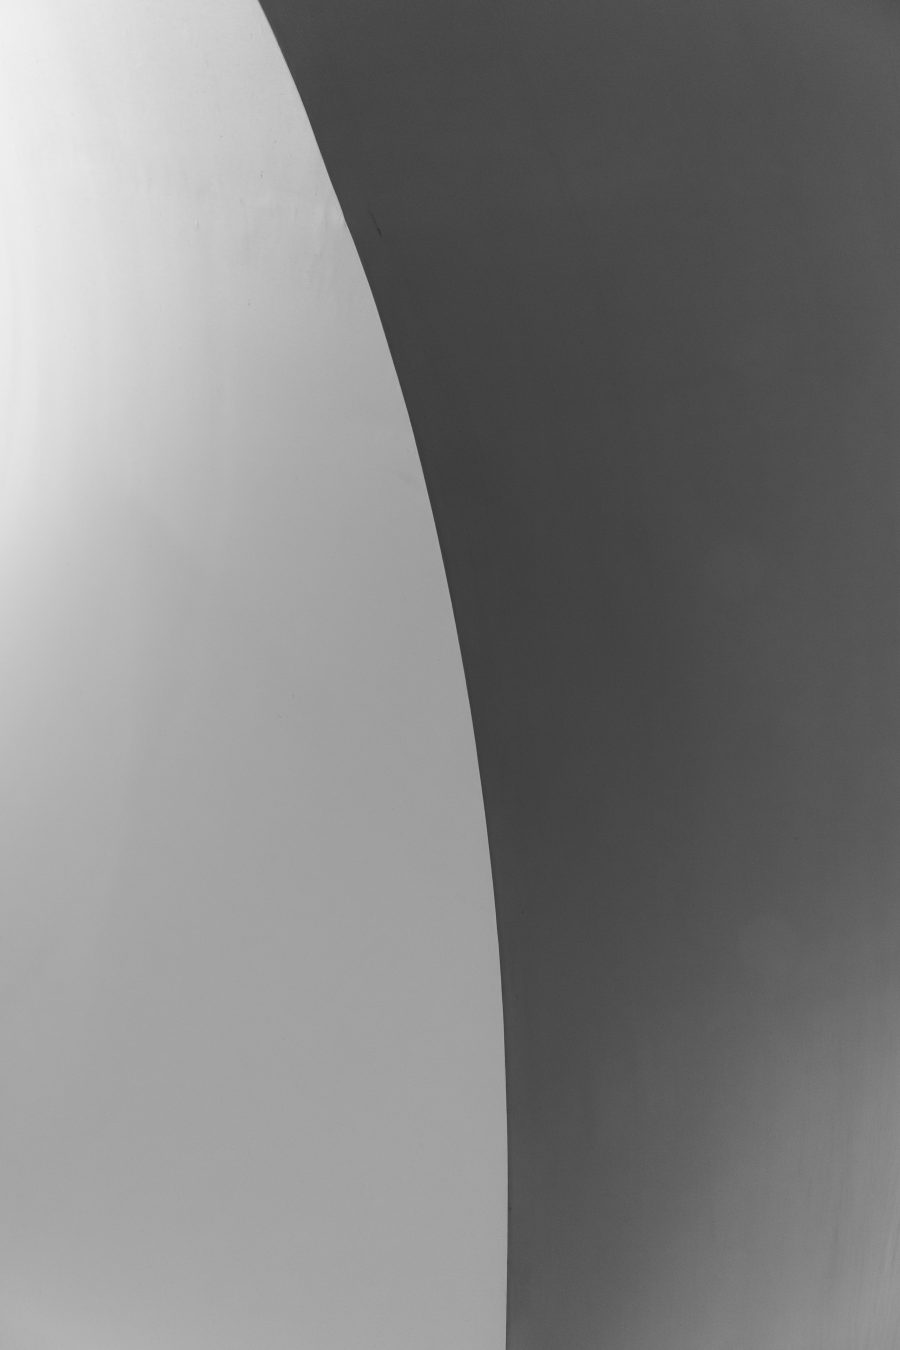 [3.6MB]黑白抽象简约手机壁纸